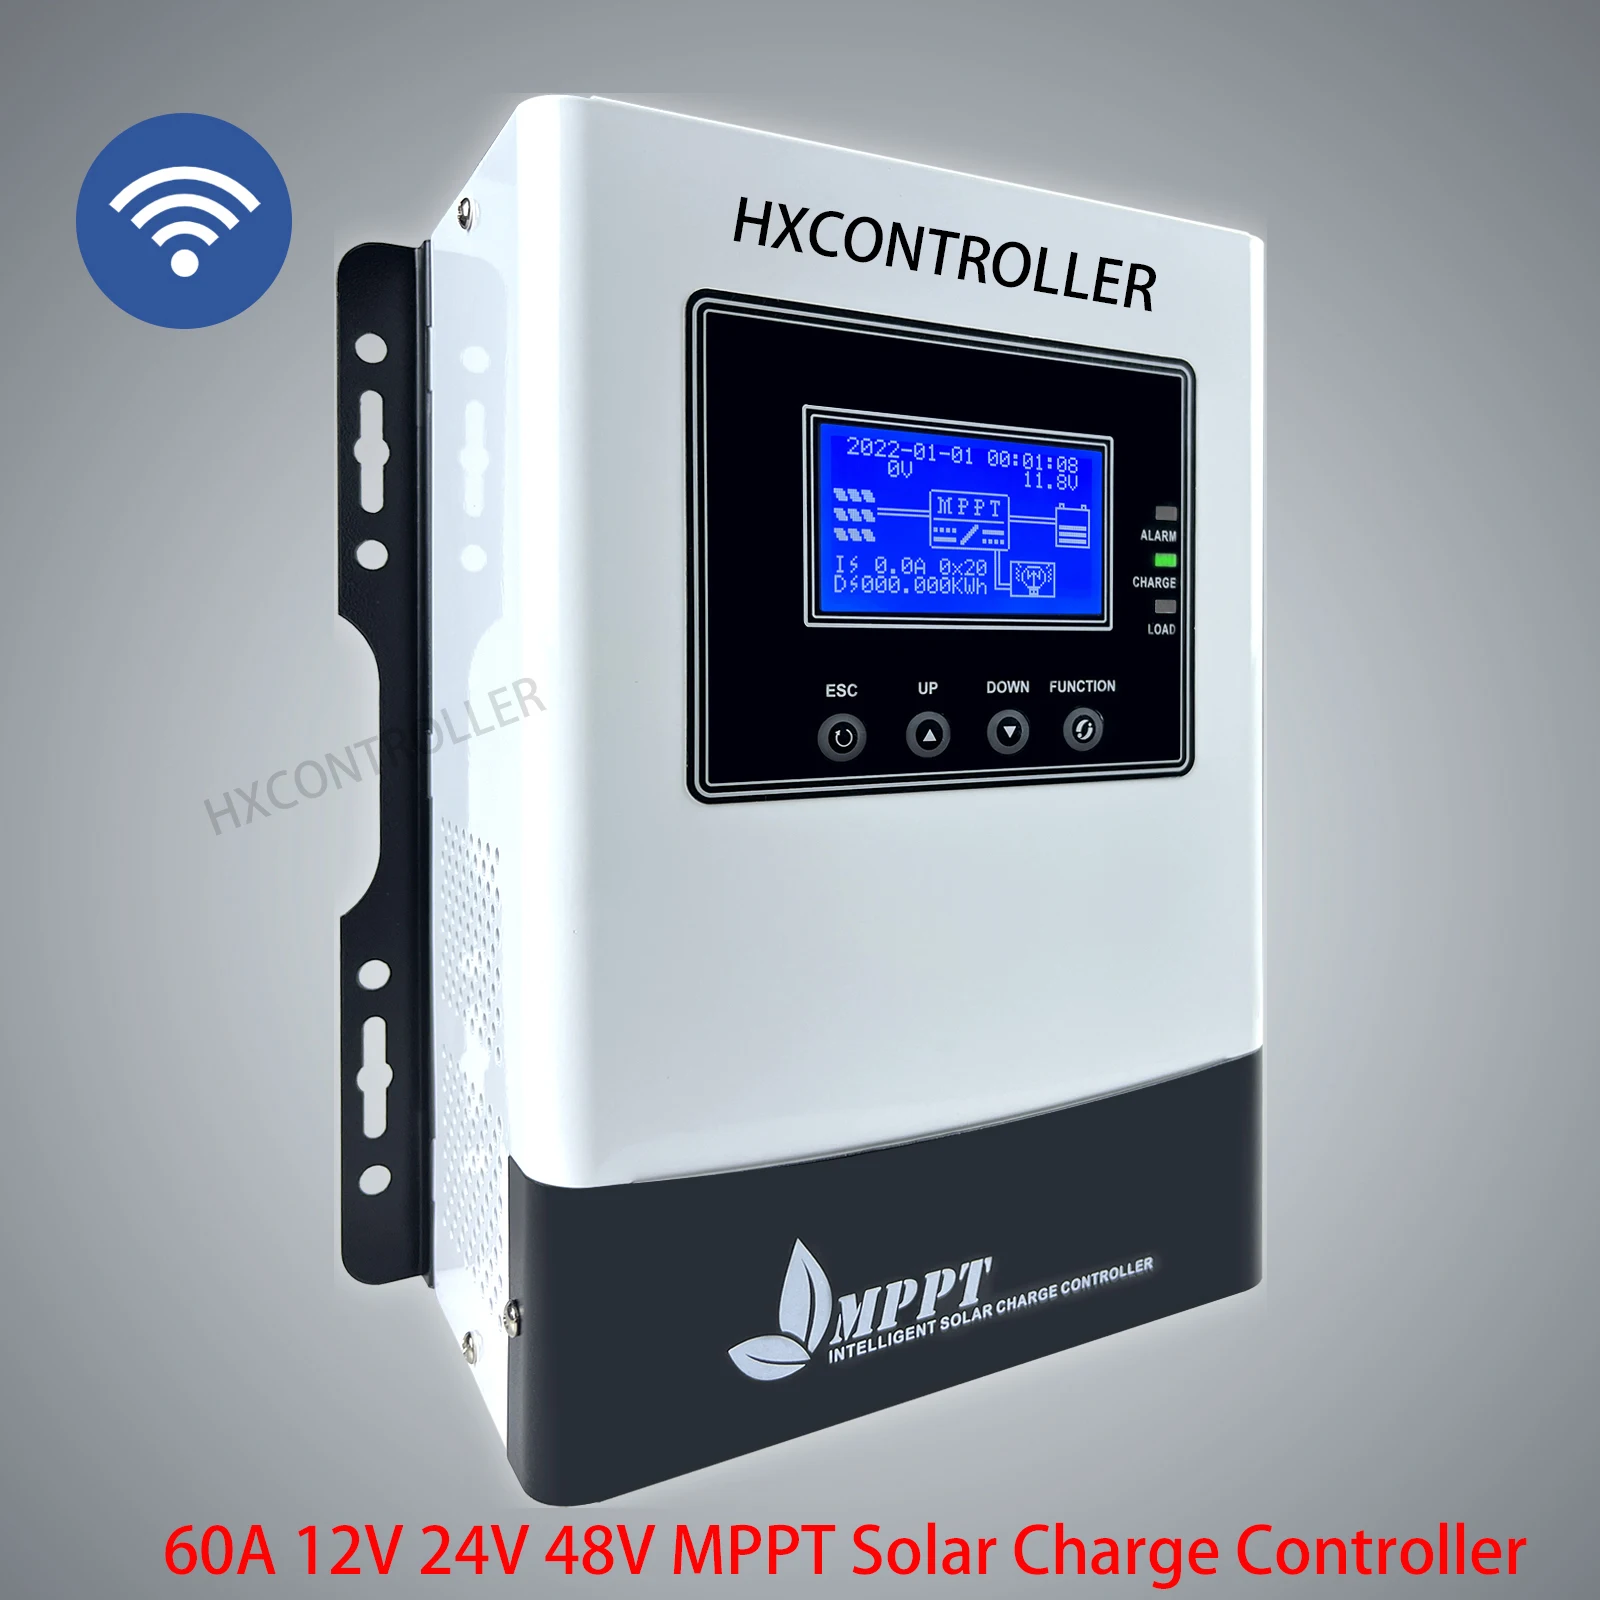 

60A MPPT Solar Charge Controller Solar Panel Regulator 12V 24V 48V Auto Max PV 150V For LiFePO4 Lithium Lead-Acid GEL Battery